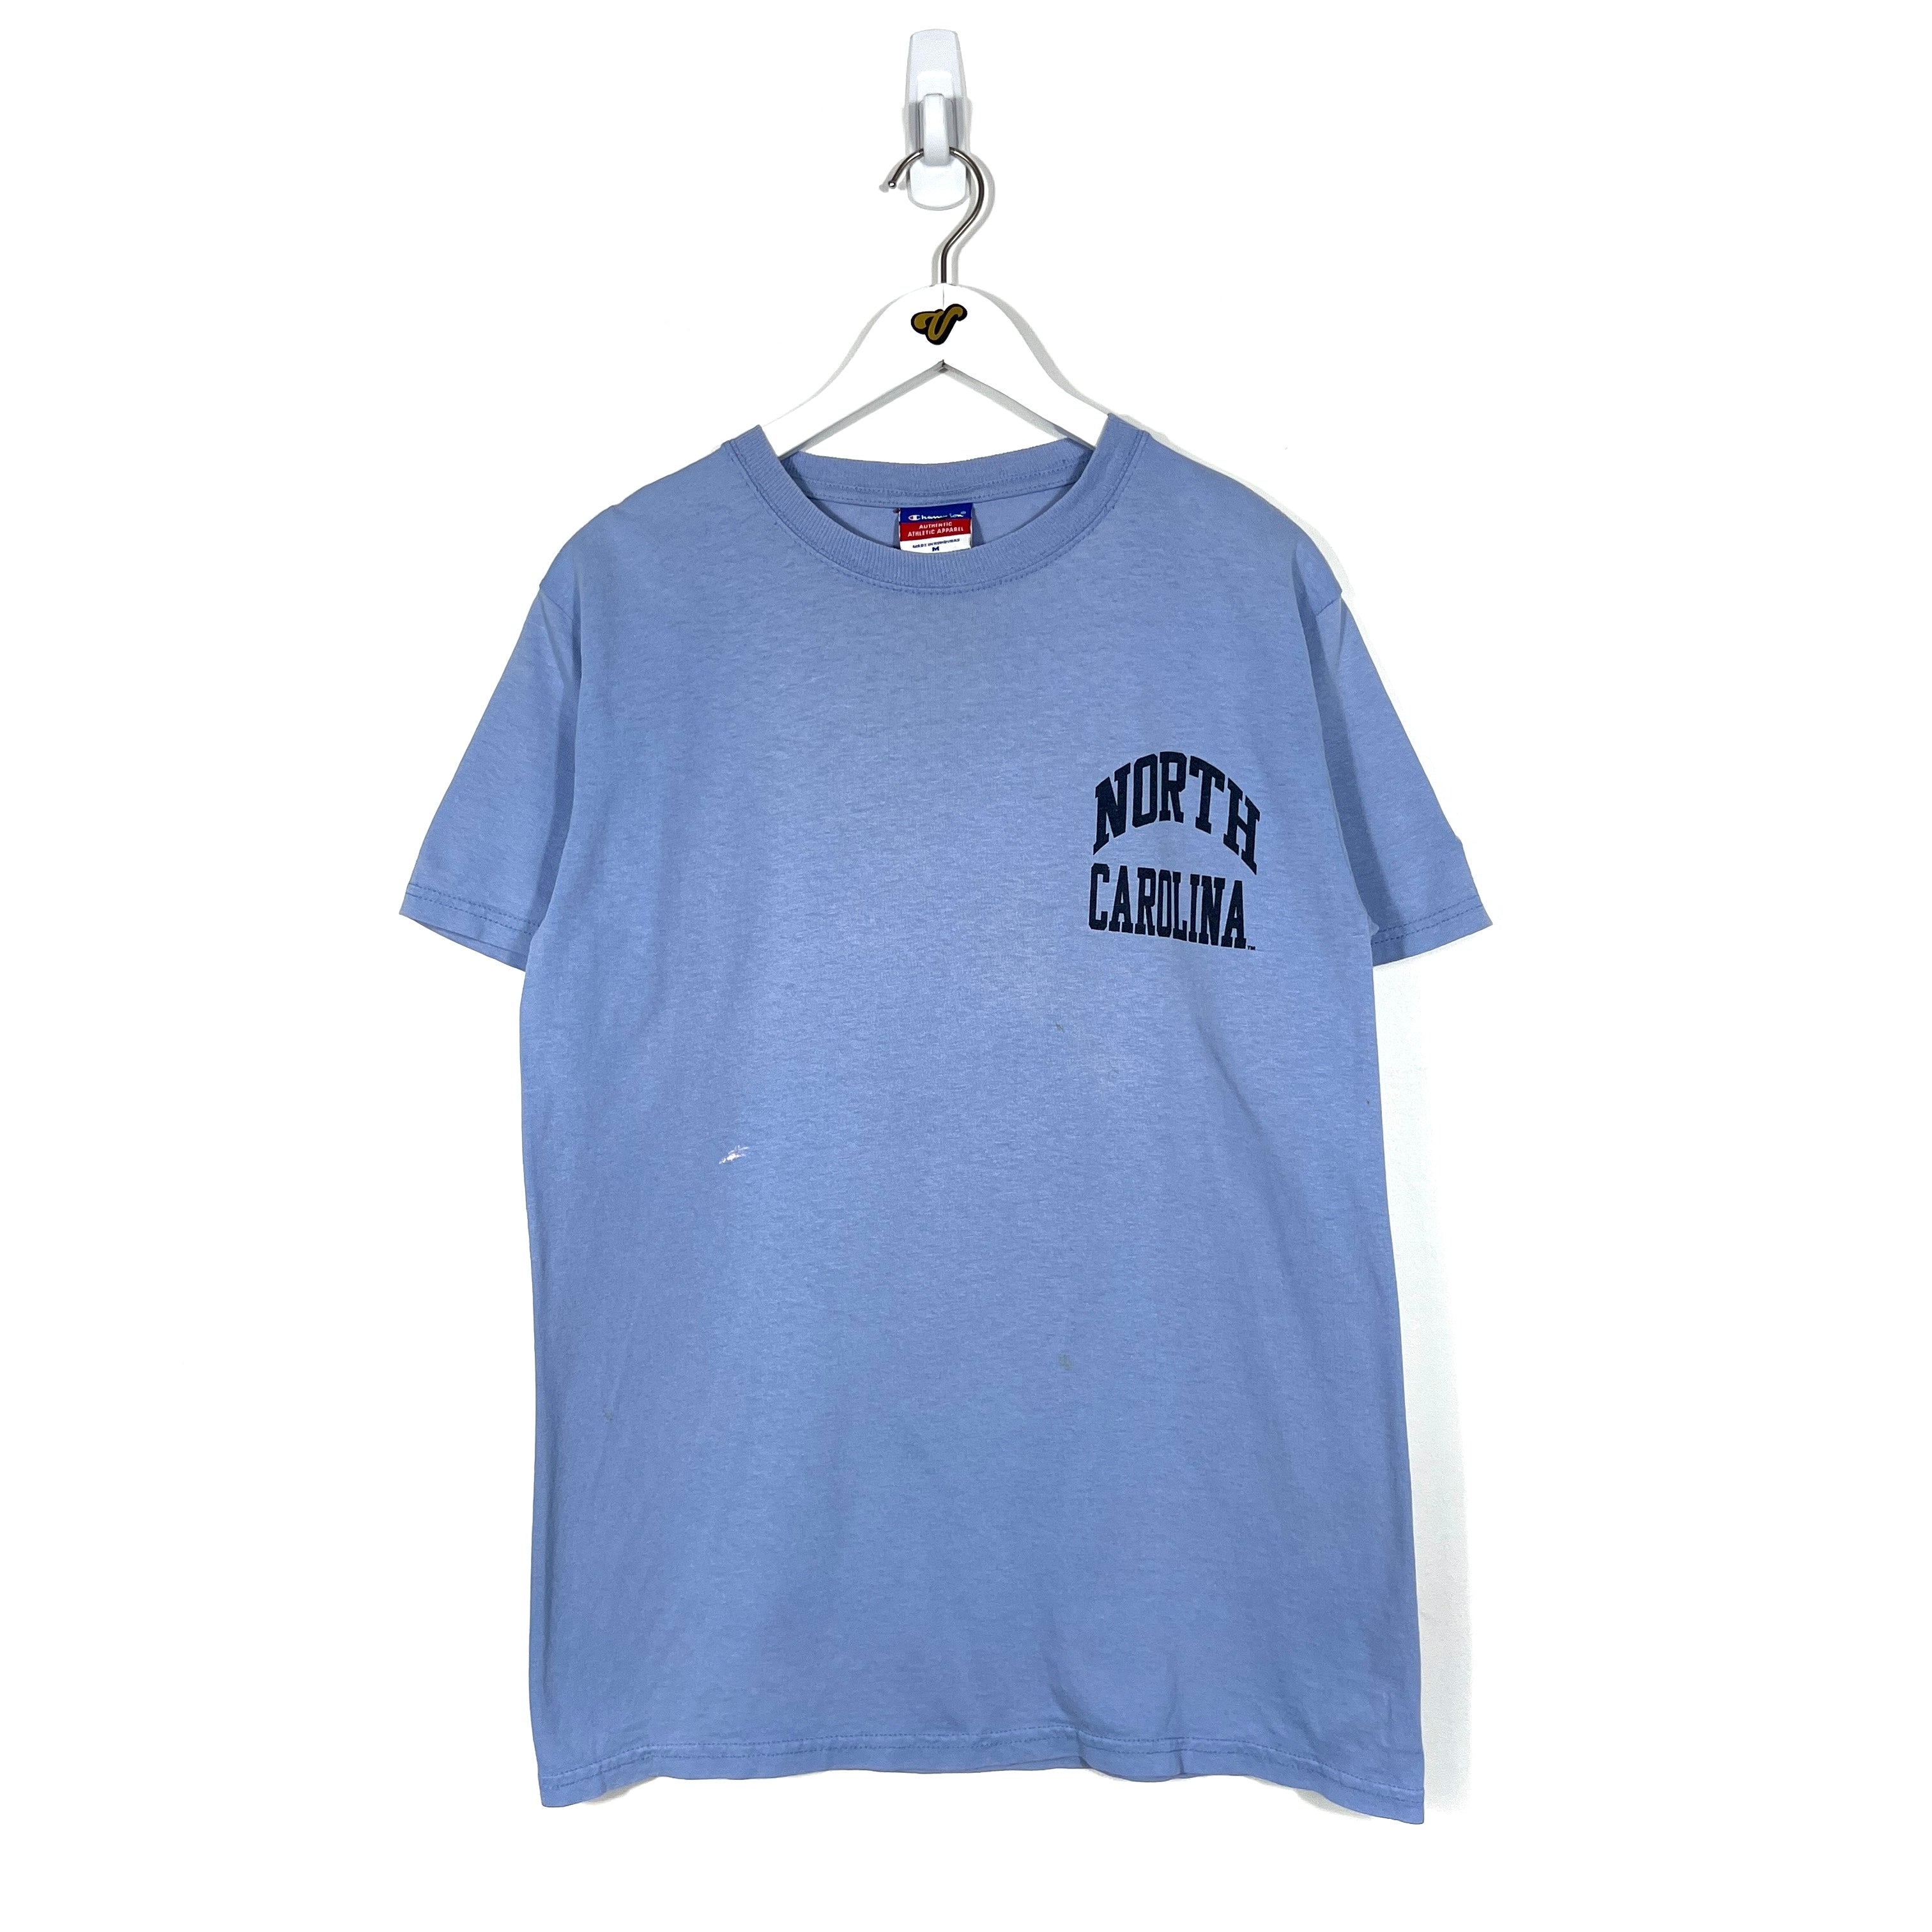 Vintage Champion North Carolina Tarheels T-Shirt - Men's Medium